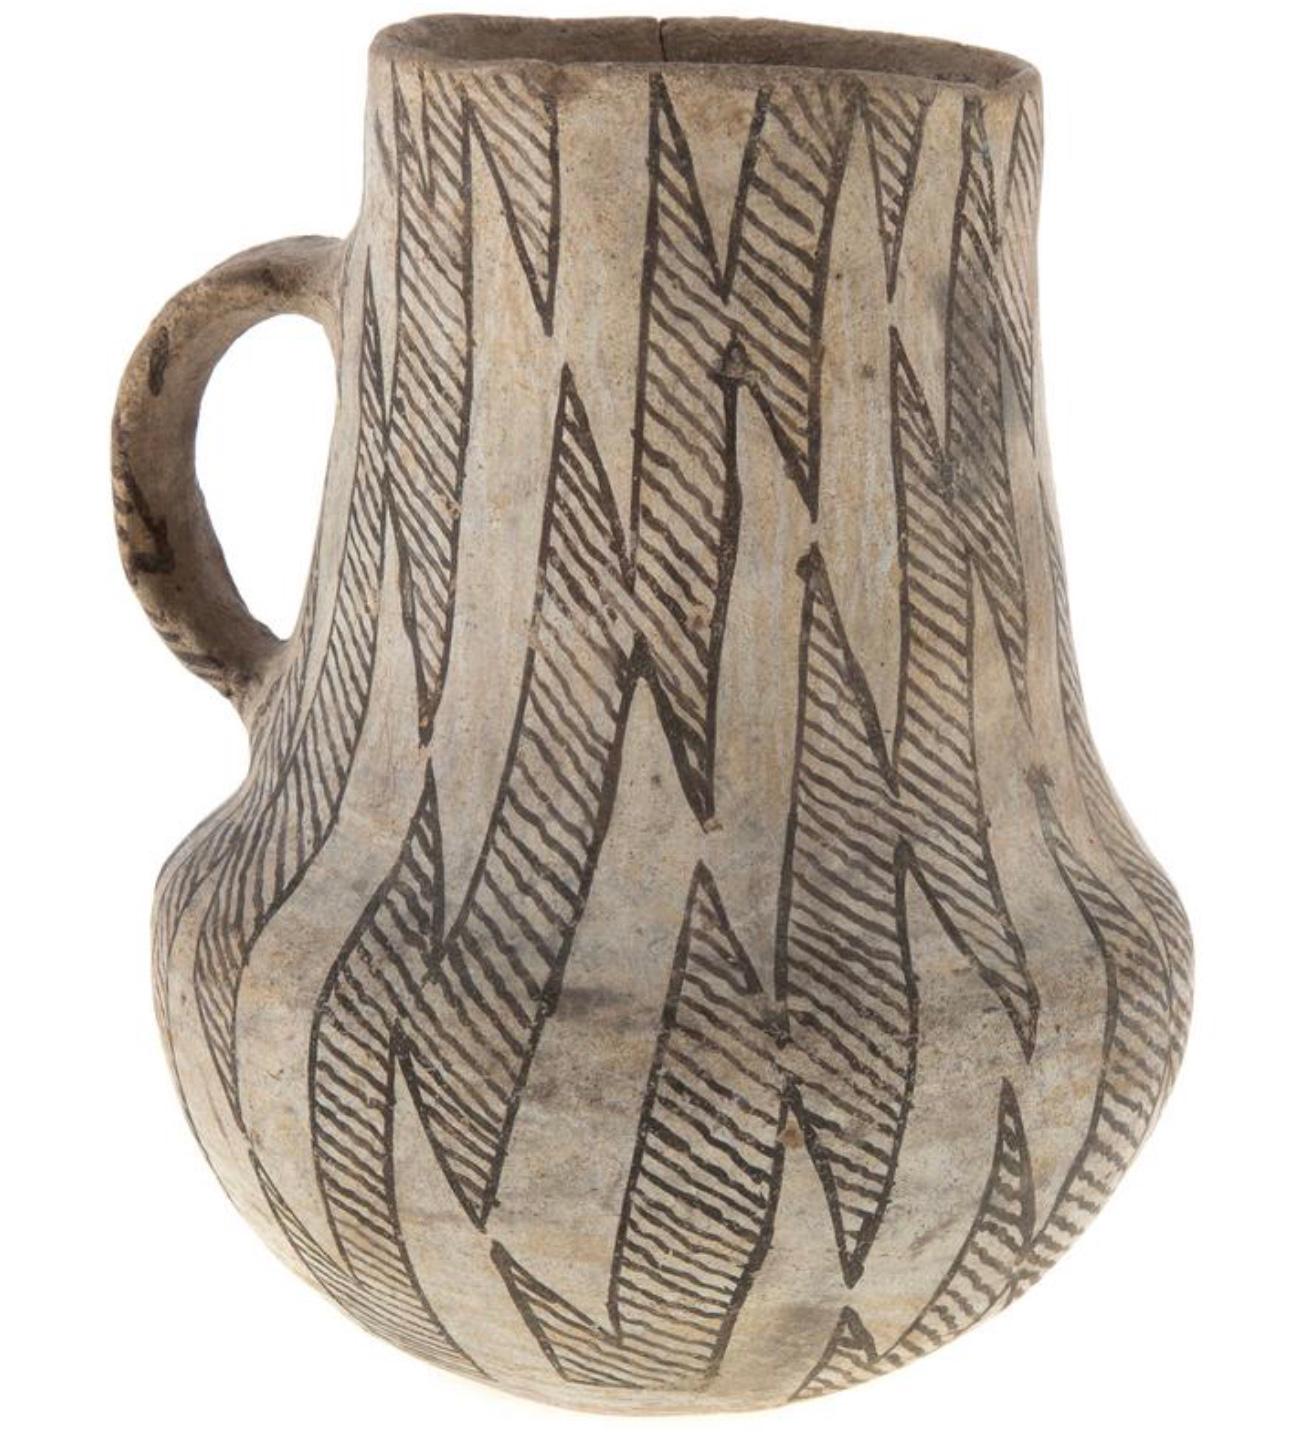 Folk Art Pre-Columbian Anasazi Black on White Pottery Mug Pitcher